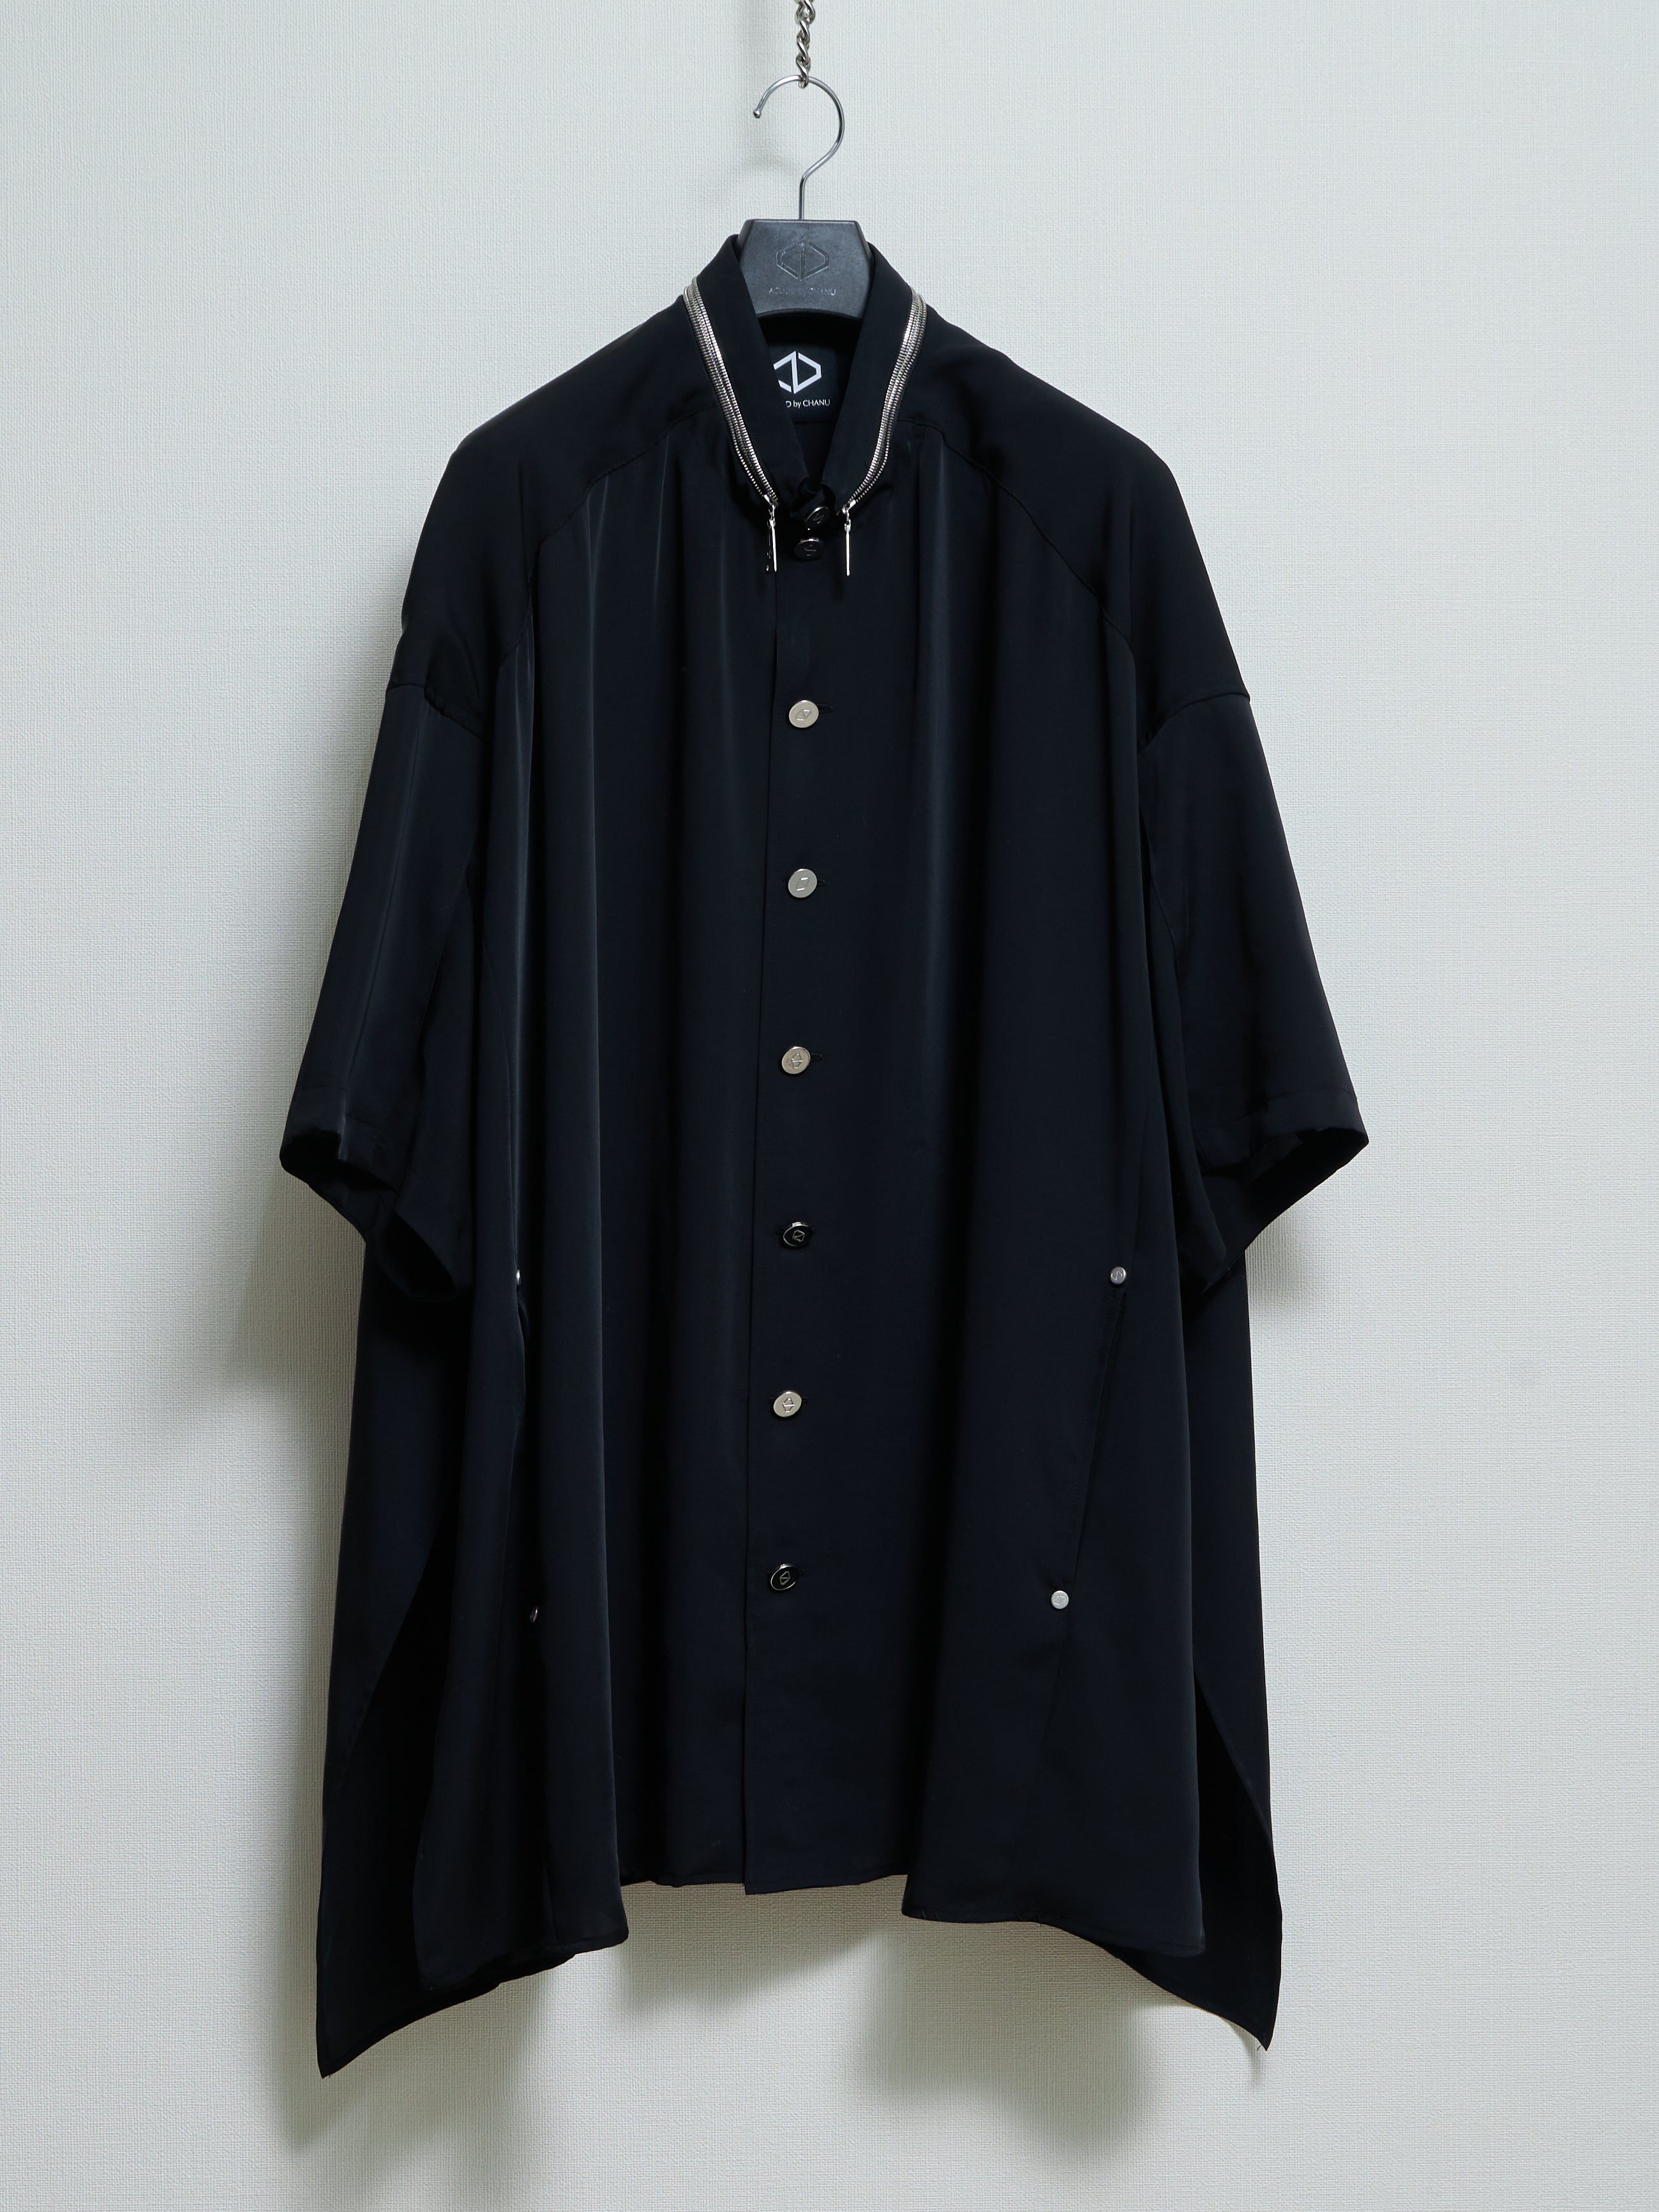 ACUOD by CHANU 22ss Kimono Rib Shirt 安いファッション - avraham 